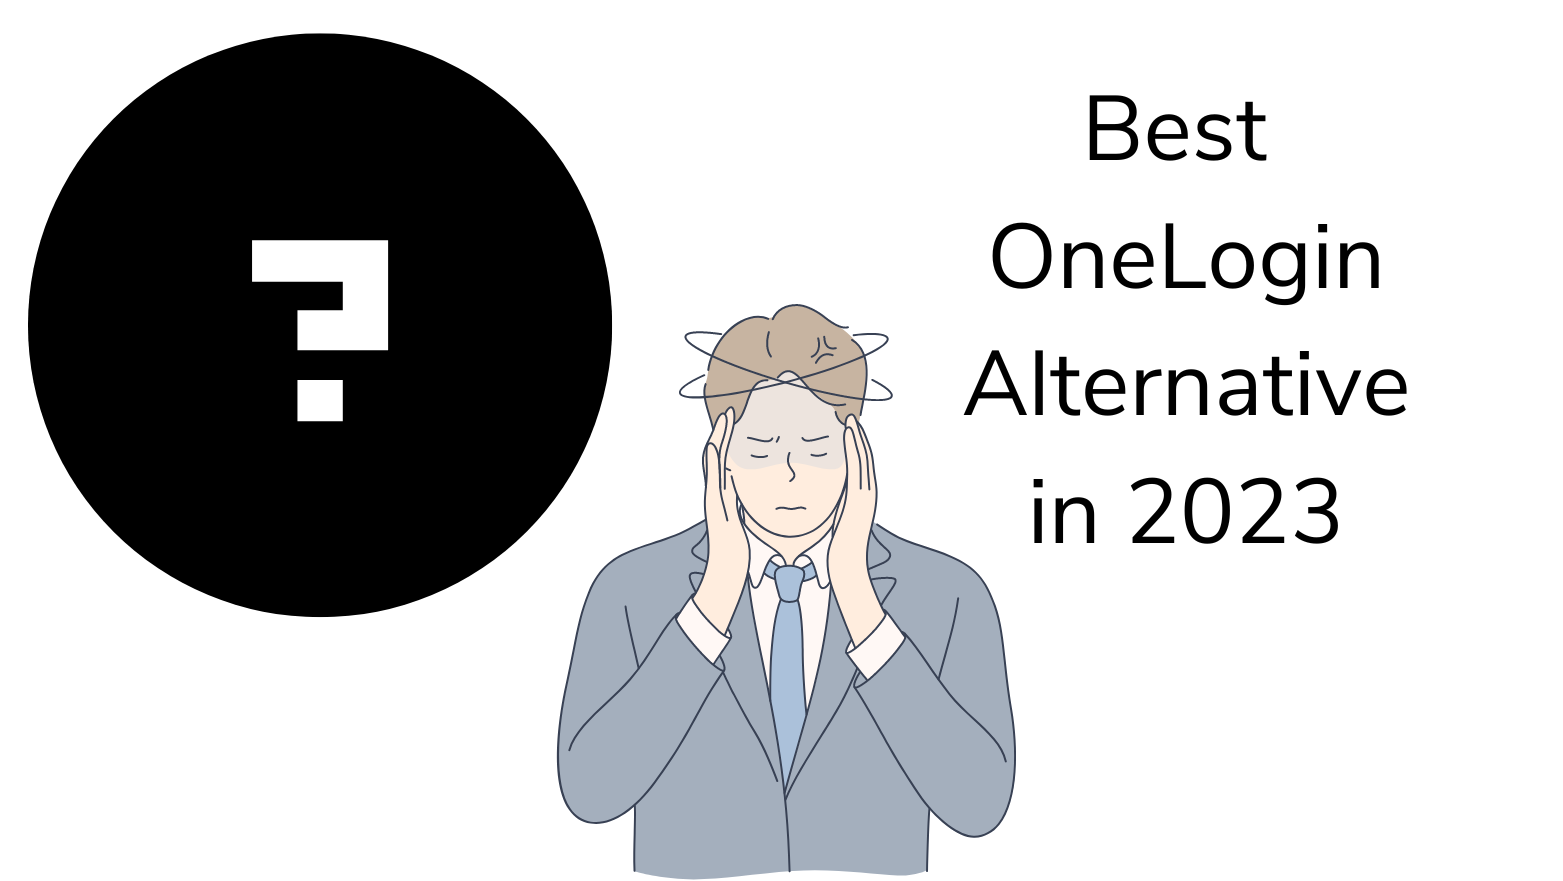 Best OneLogin Alternative in 2023